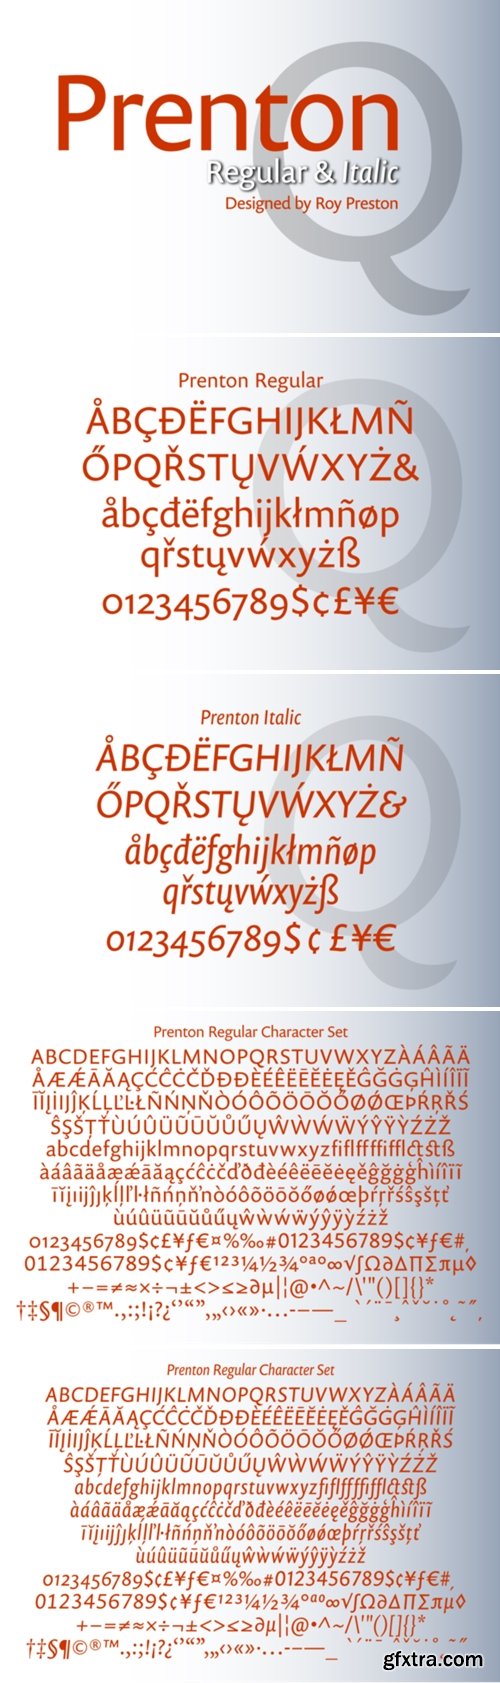 Prenton Regular and Thin Font Font